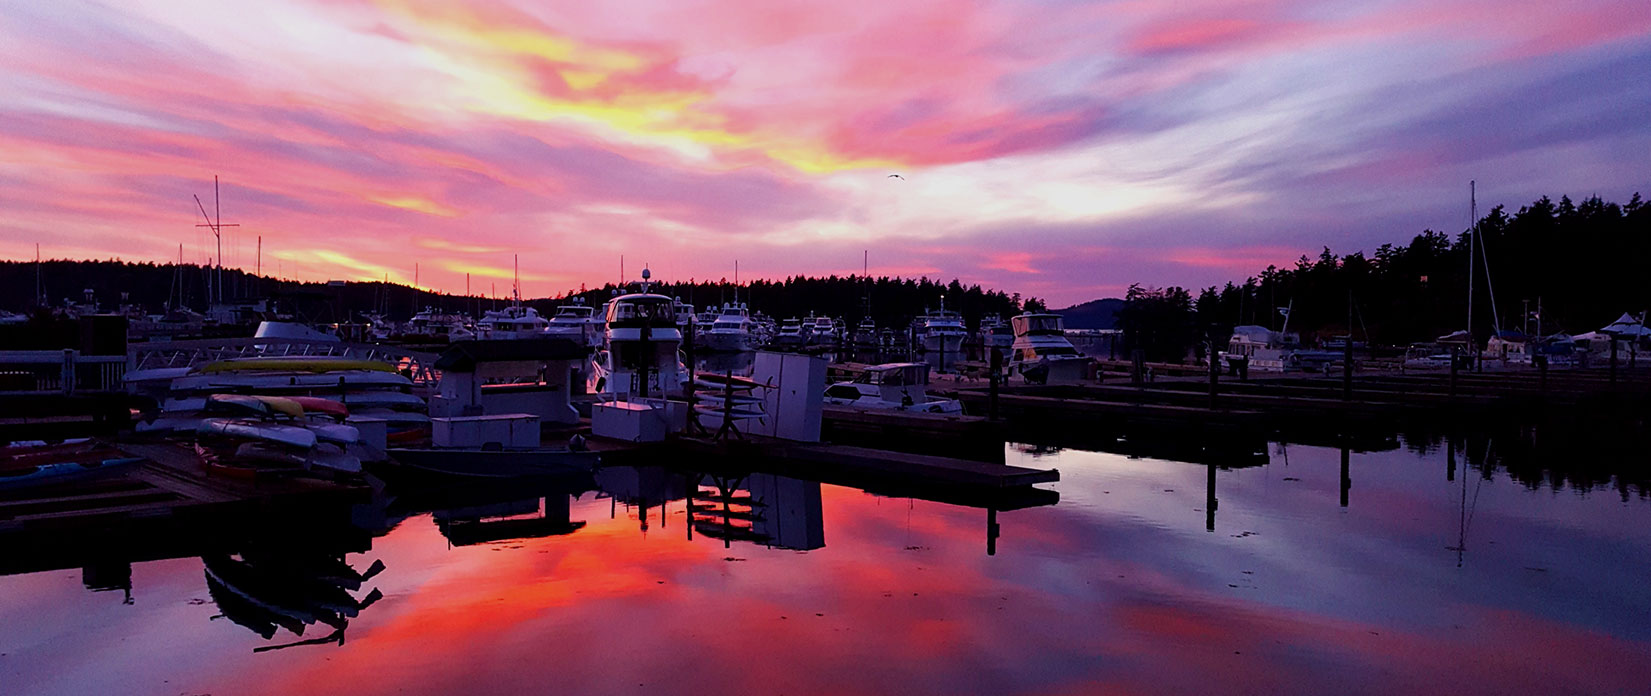 harbor boats at sunset